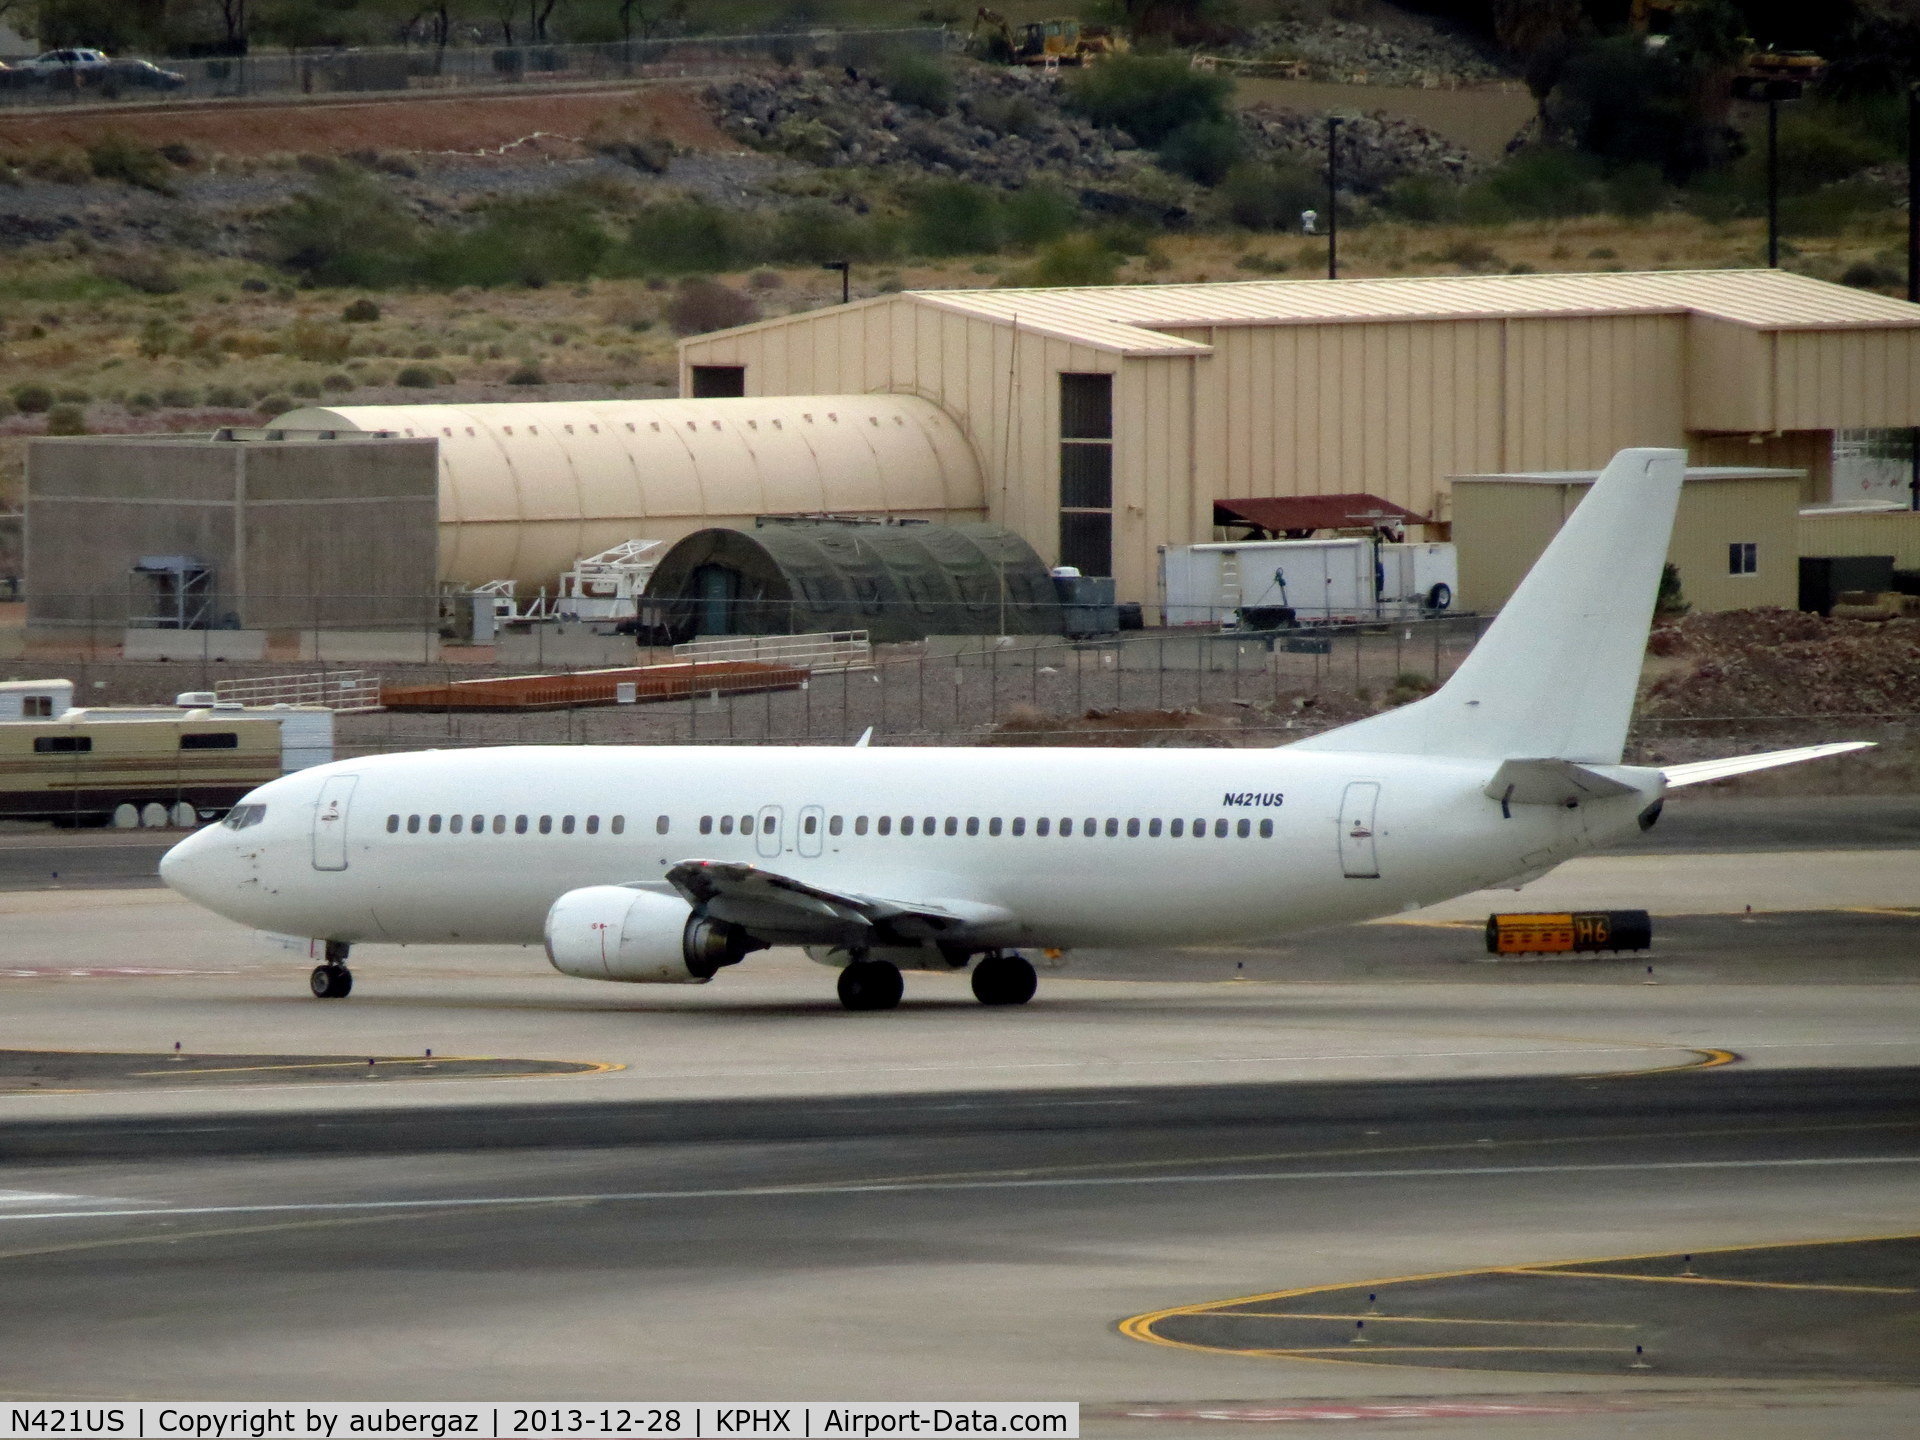 N421US, 1989 Boeing 737-401 C/N 23988, Former USAir aircraft returns to PHX sans titles